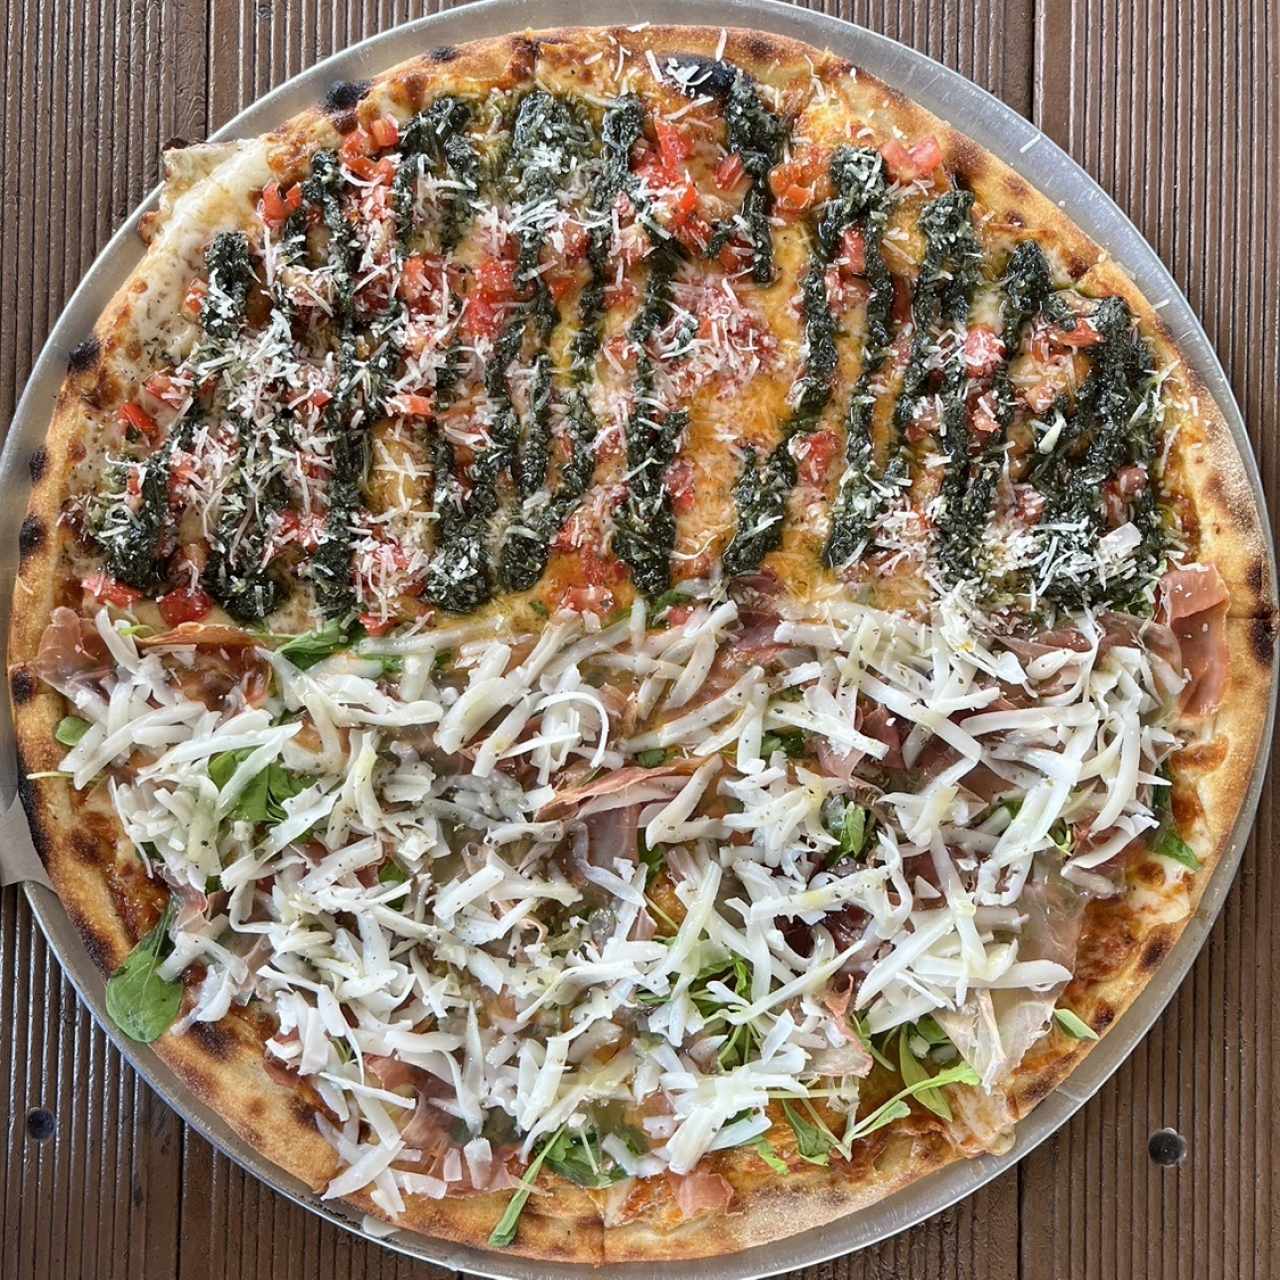 Ordena tu pizza mitad y mitad (esto es pesto/fabi fabi)